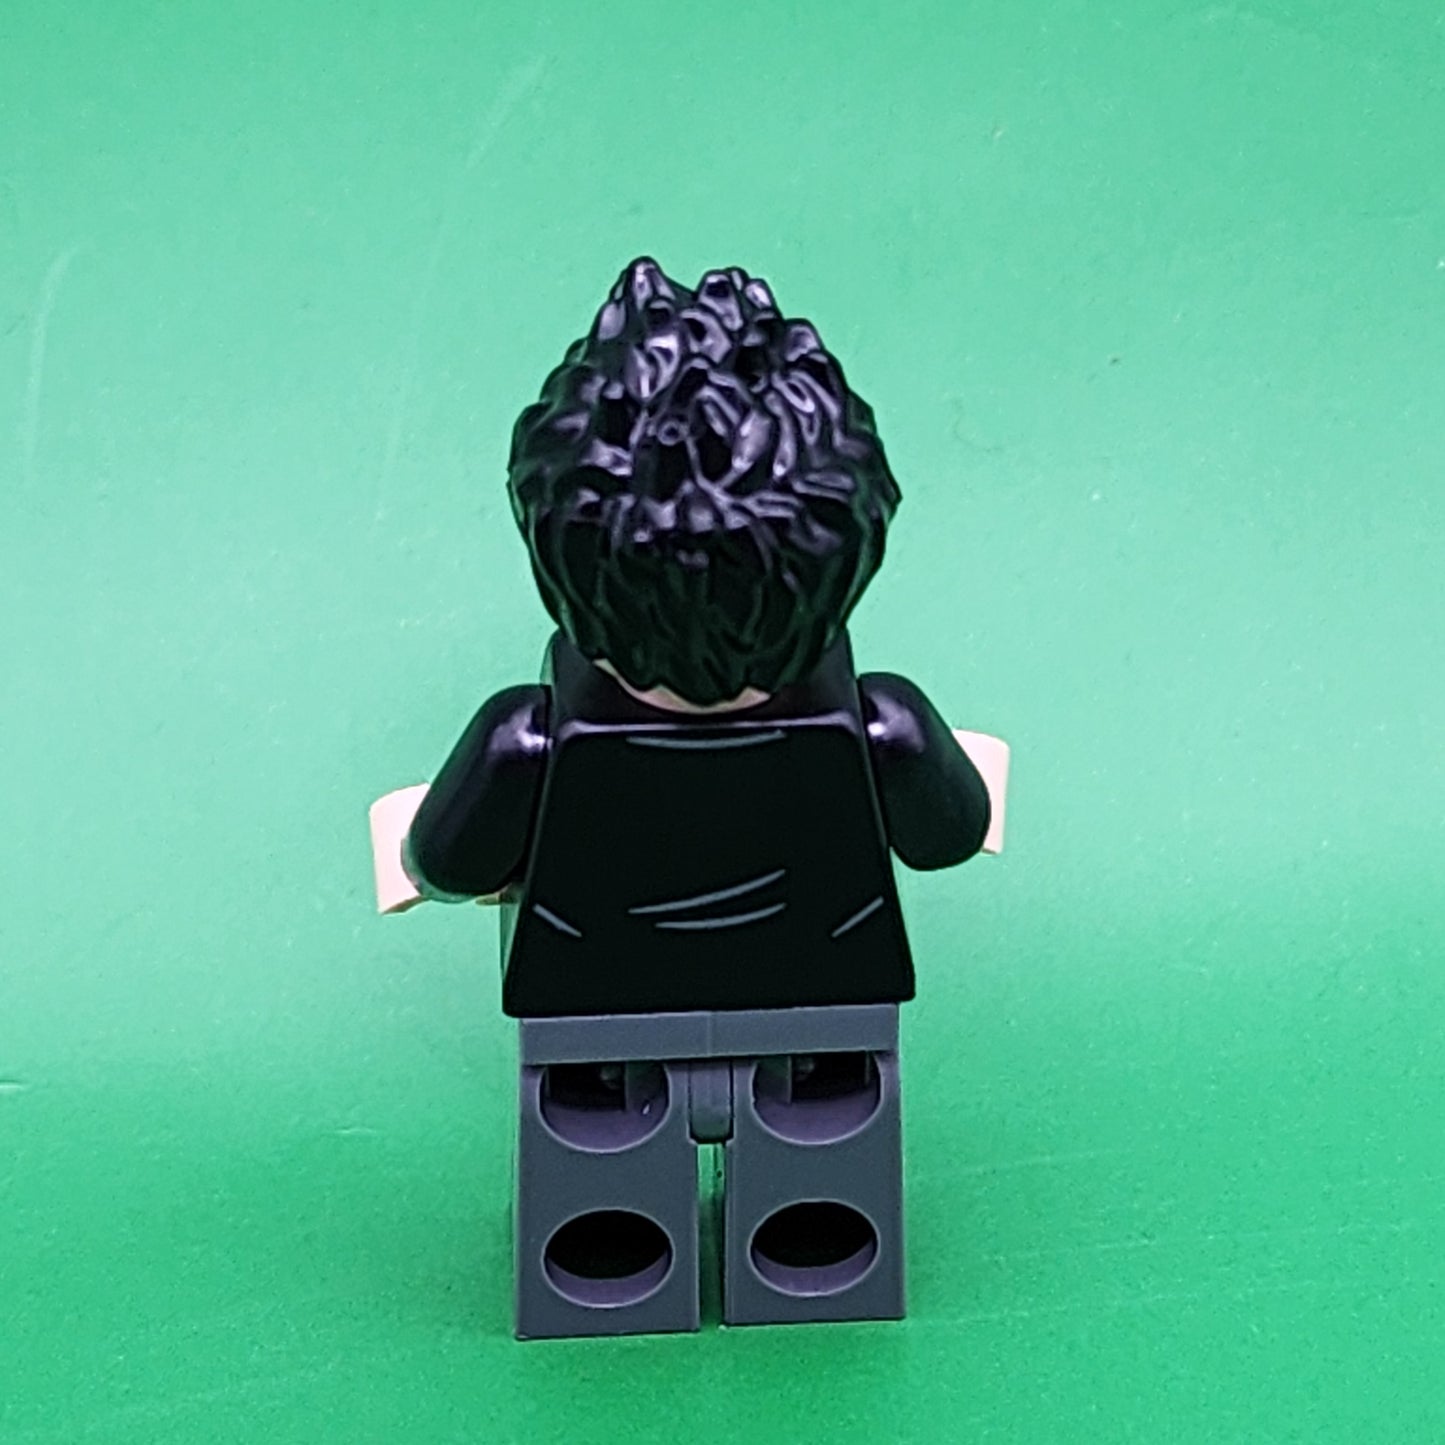 Lego Tony Stark Minifigure sh747 Super Heroes Black Shirt